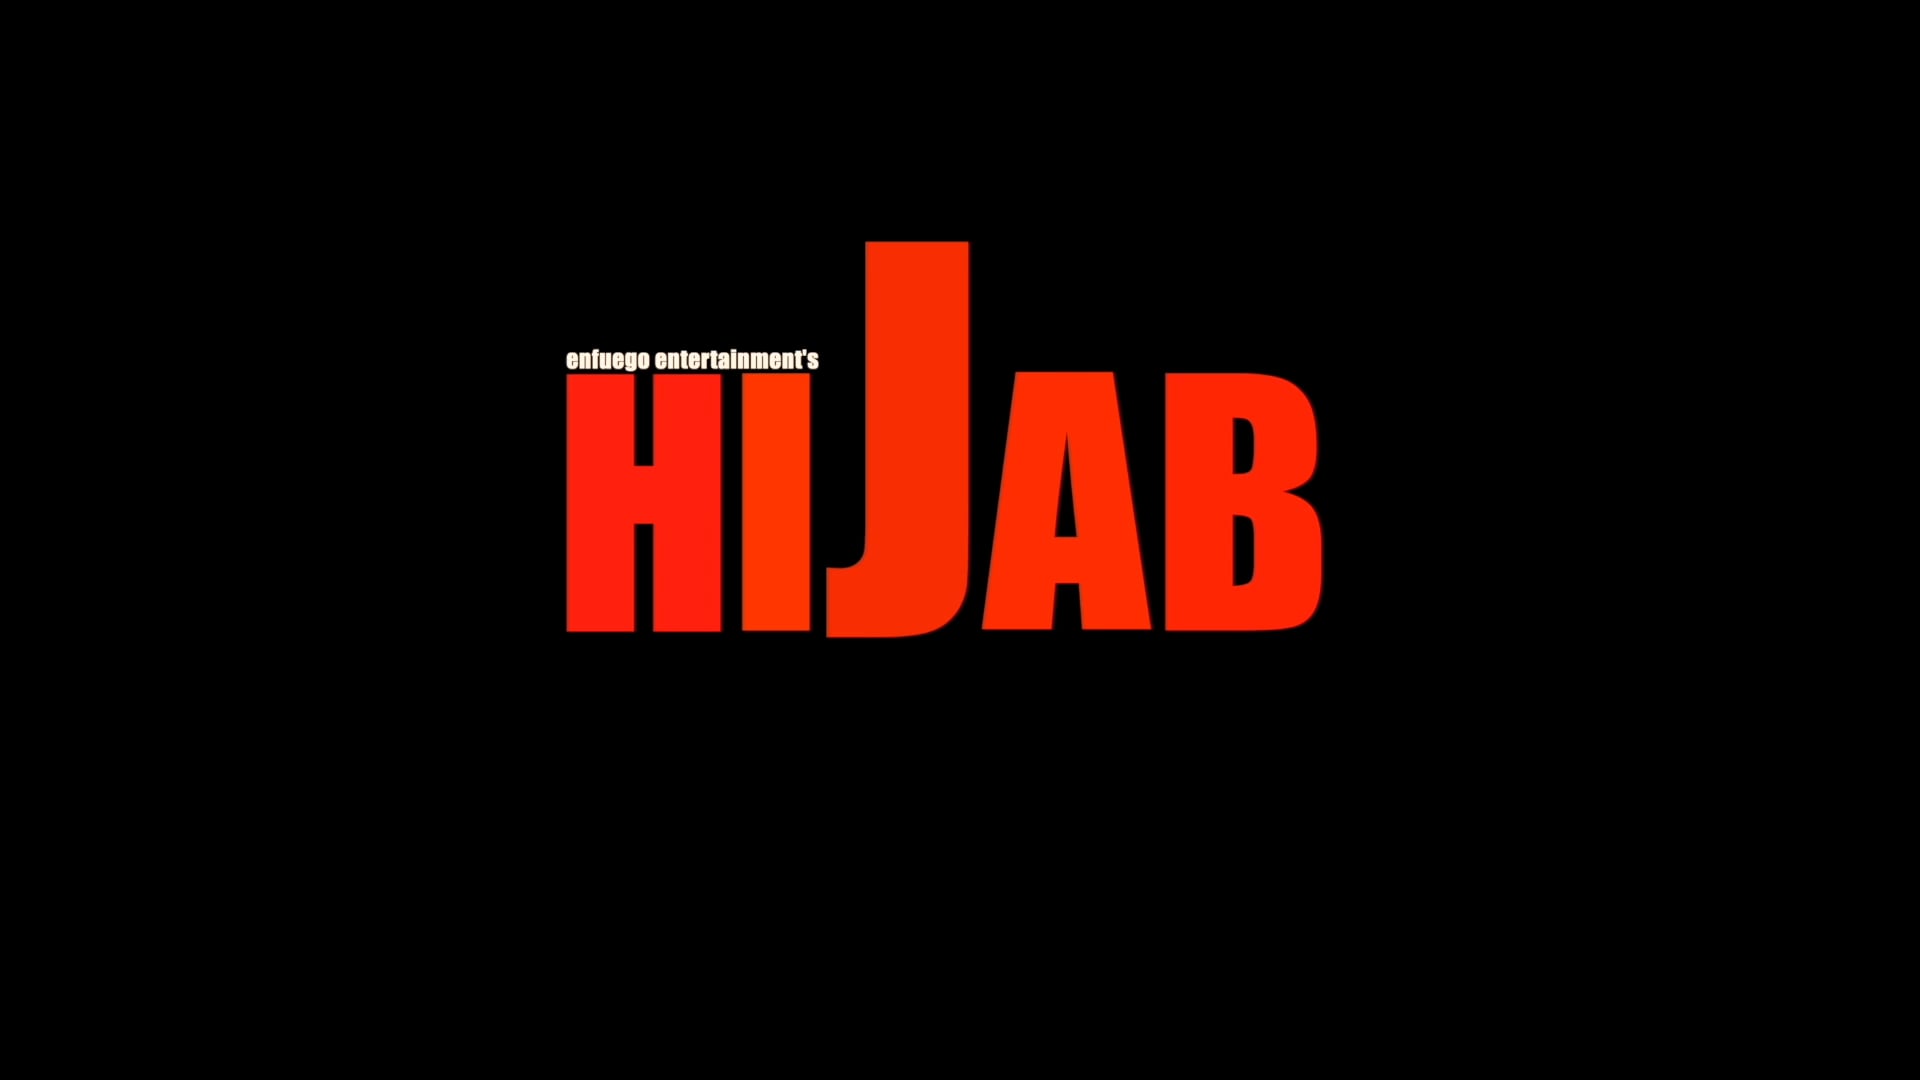 Hijab Trailer